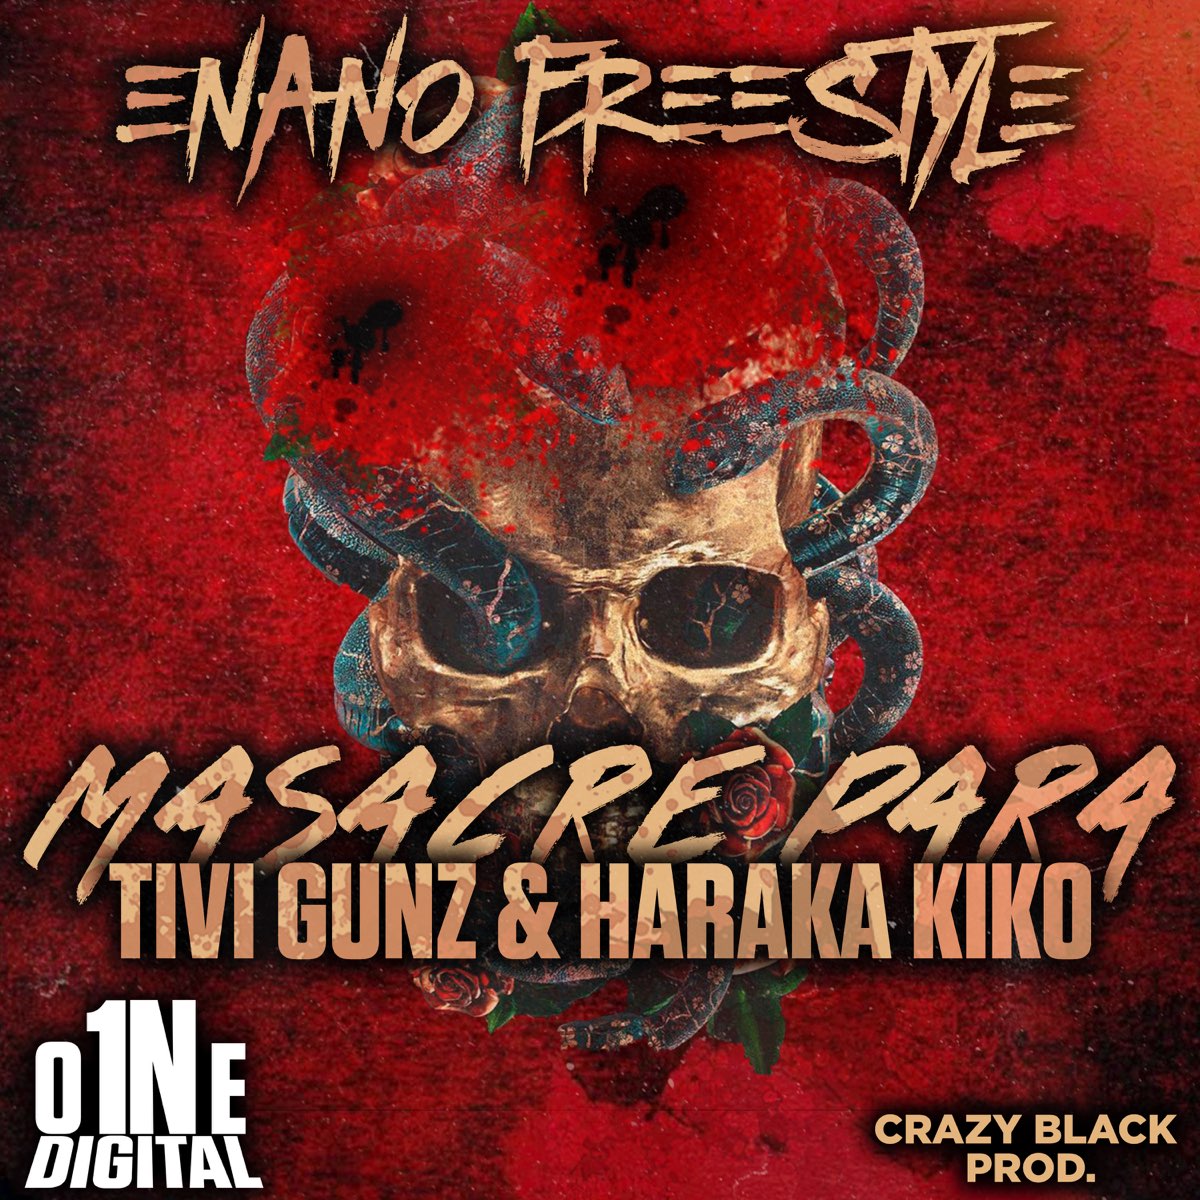 ‎Masacre para TIVI GUNZ & HARAKA KIKO - Single by Enano Freestyle on ...